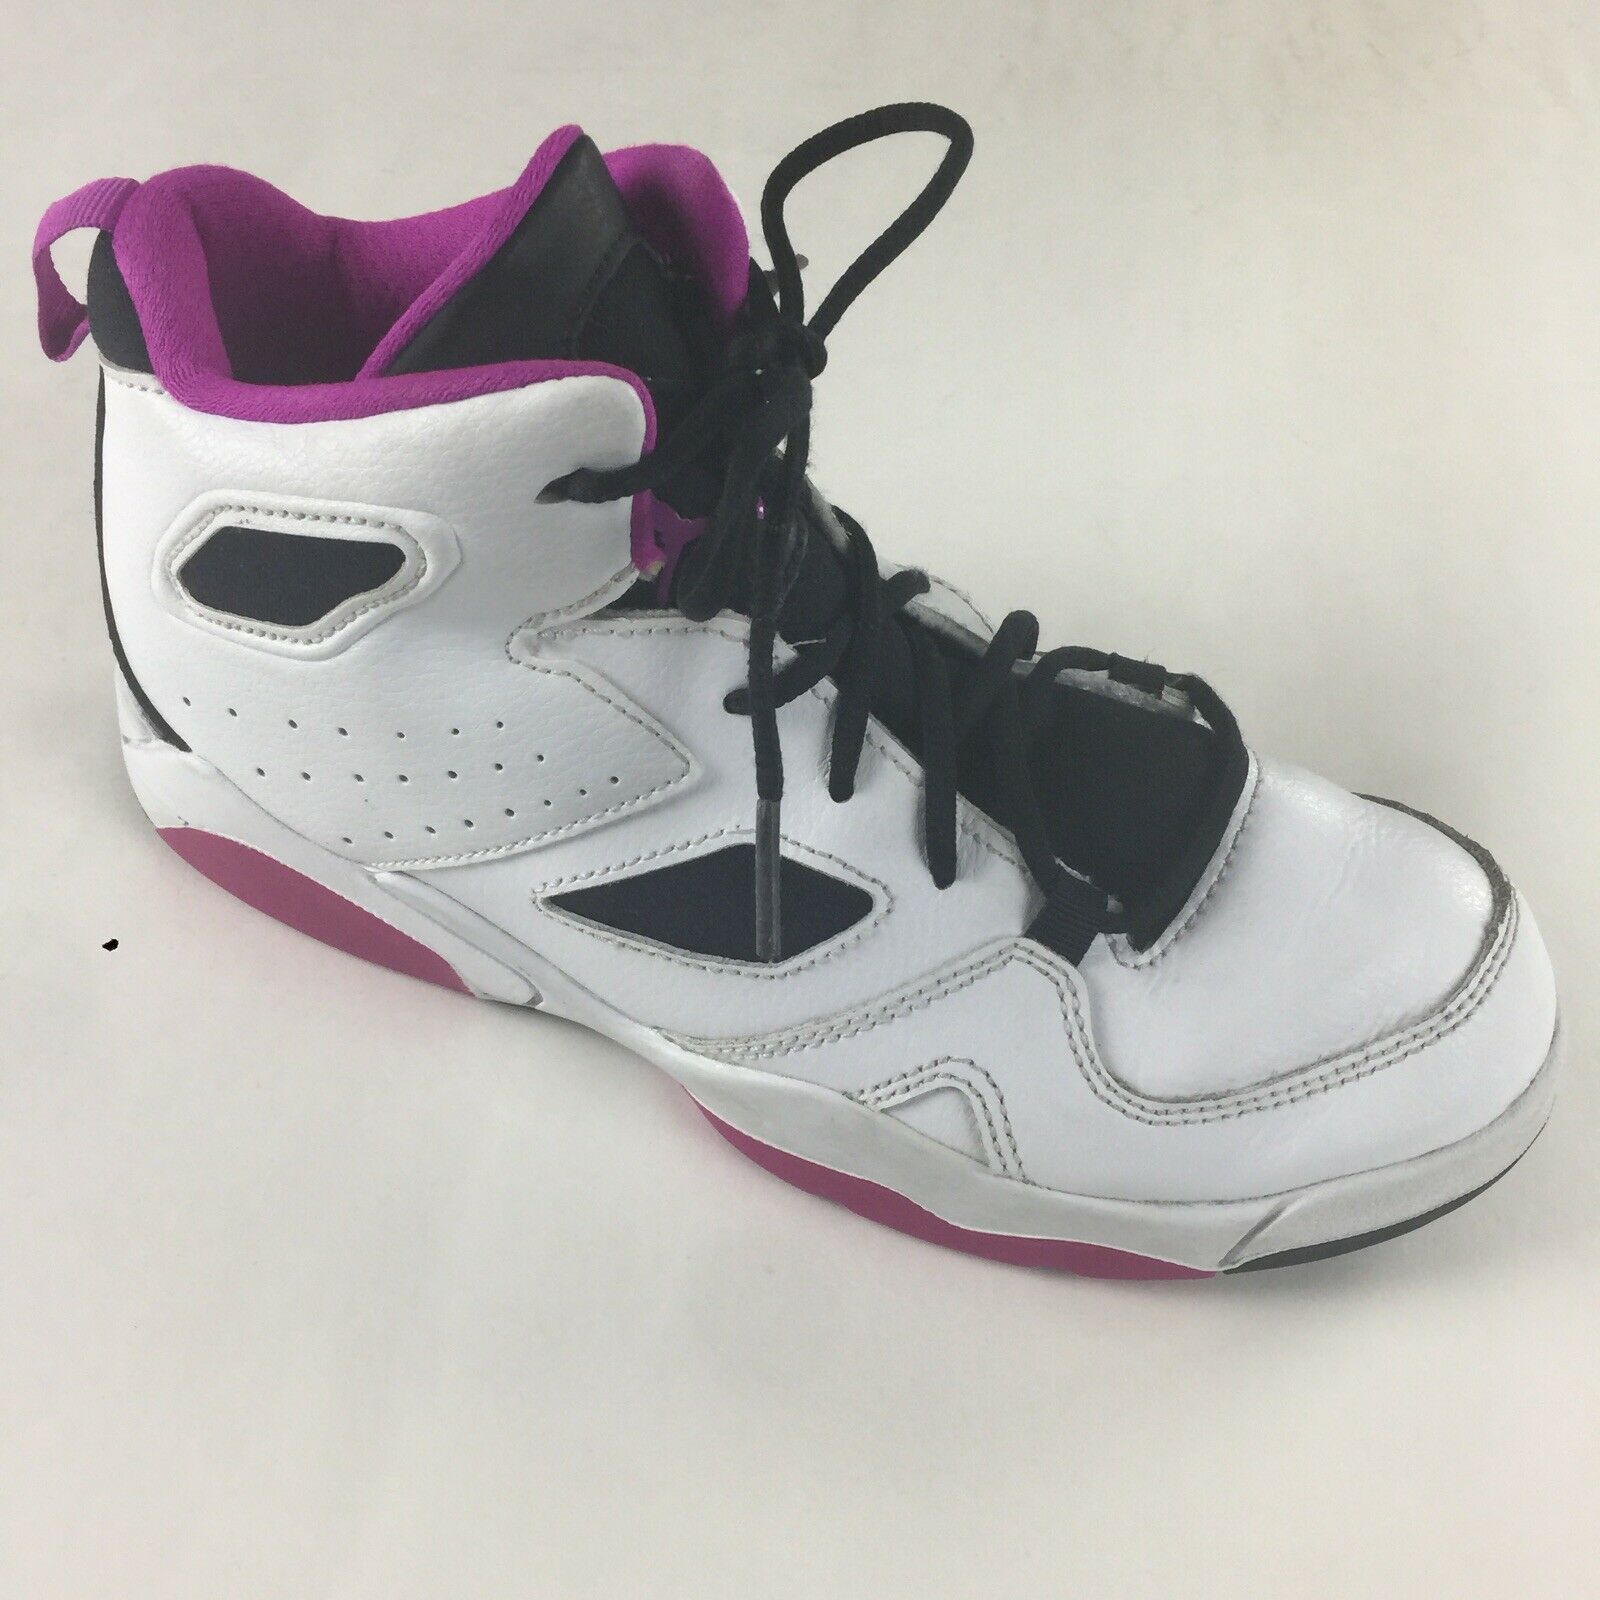 Nike Air Jordan Girls Flight Club 91 Retro Basketball Shoes 555332-100 Size 3Y